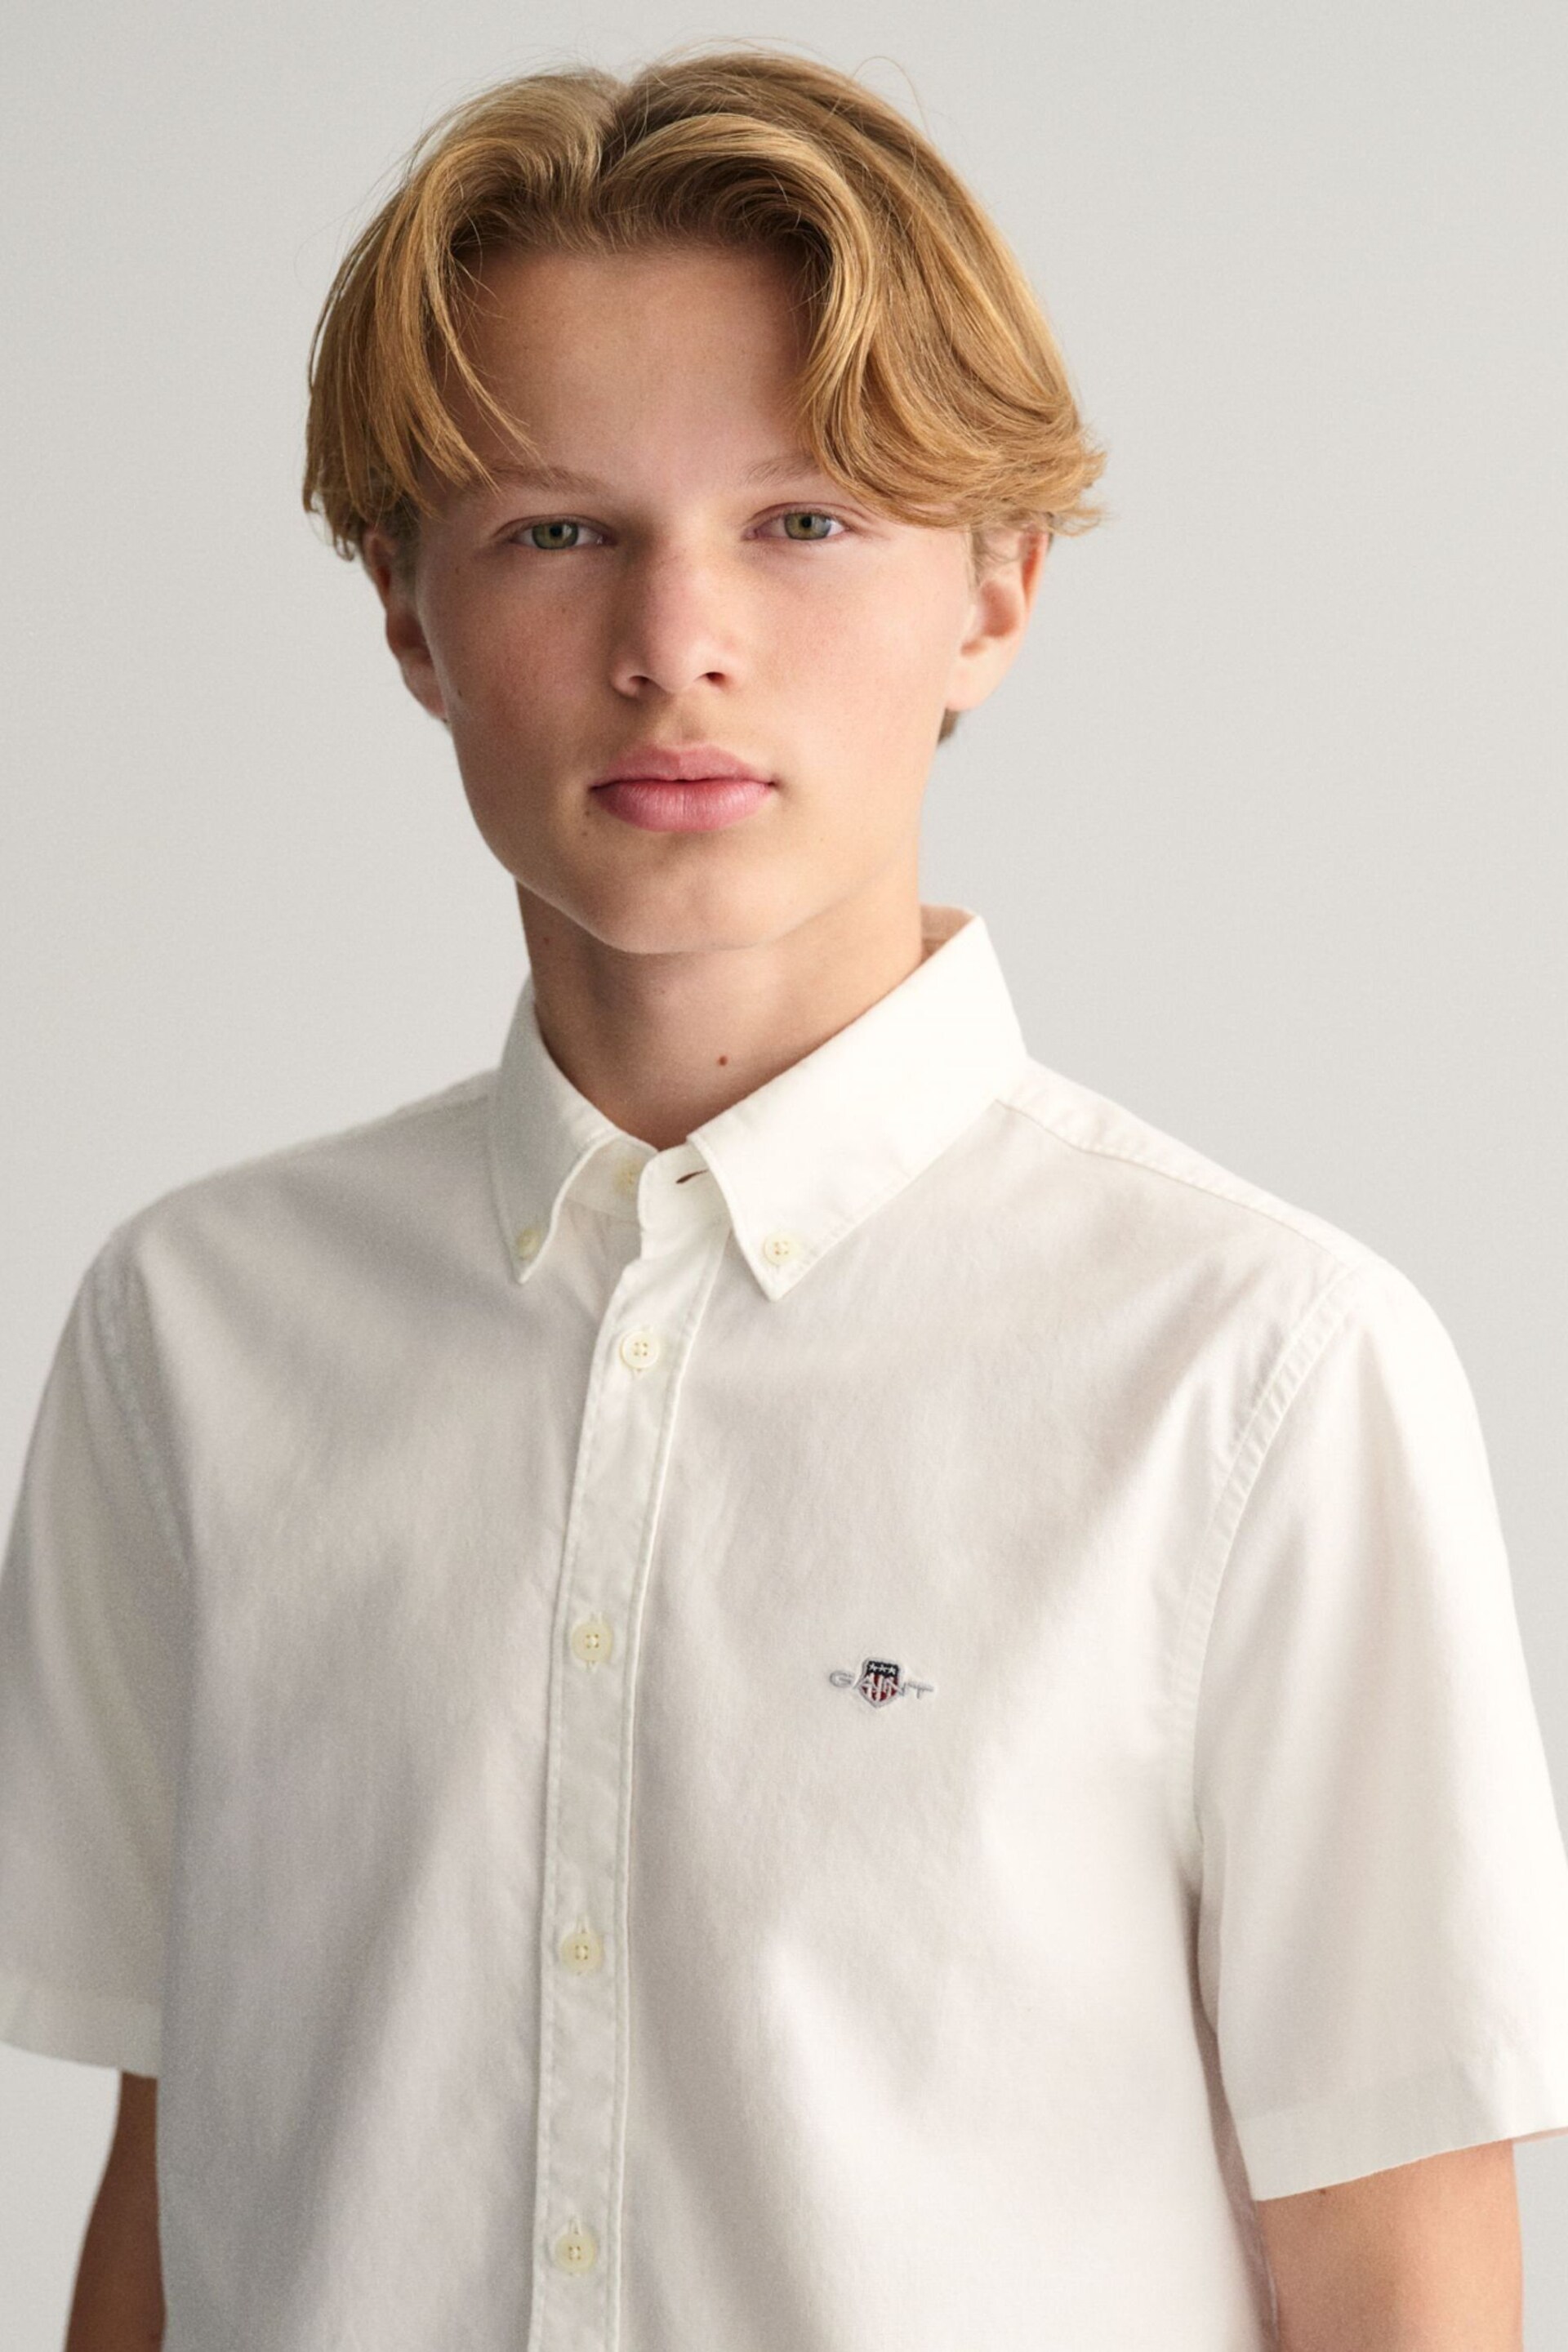 GANT White Boys Oxford Short Sleeve Shirt - Image 1 of 1